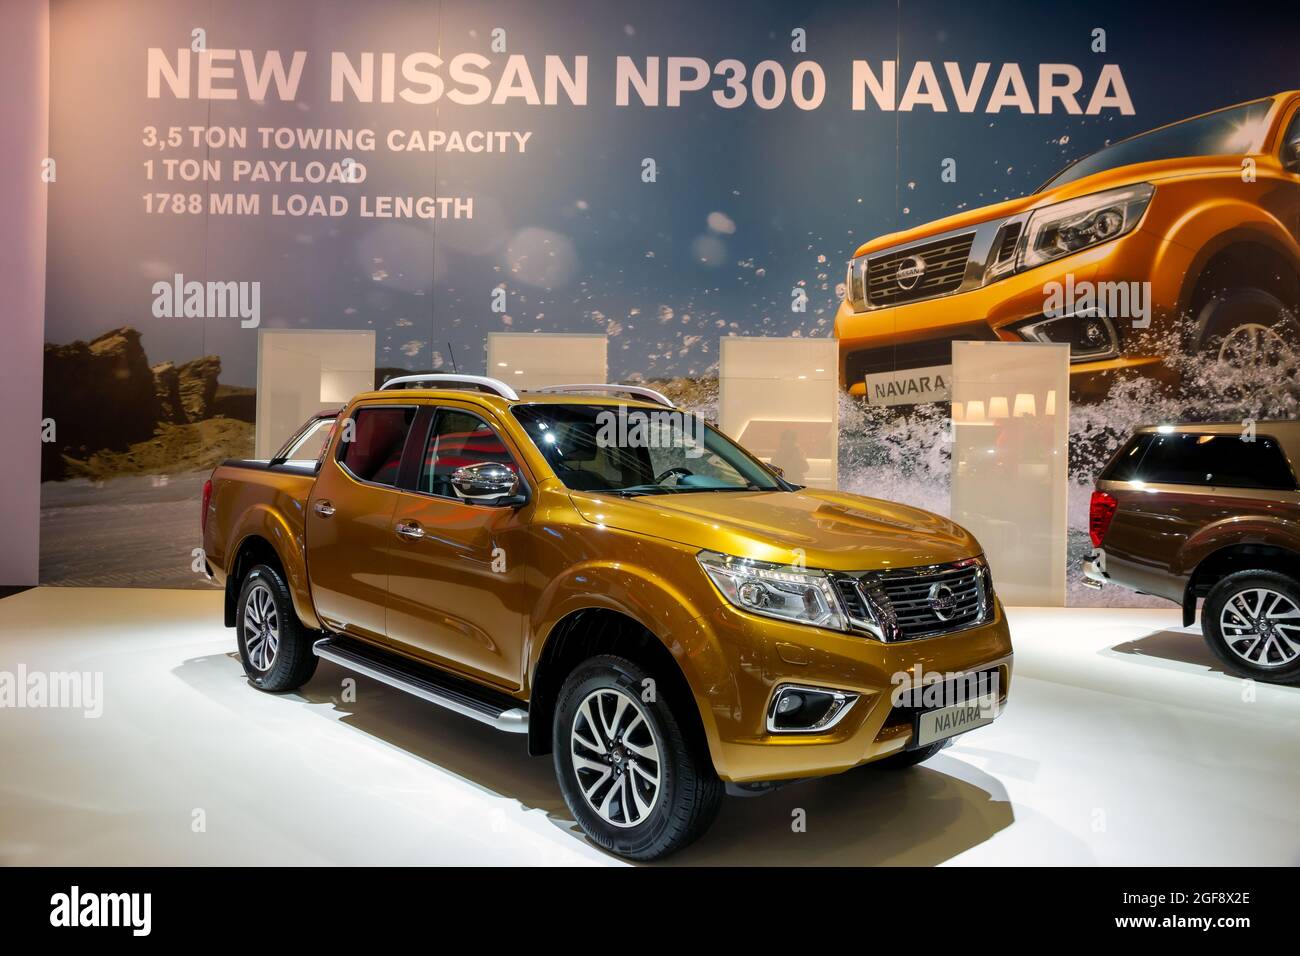 Nissan navara pick up hi-res stock photography and images - Alamy